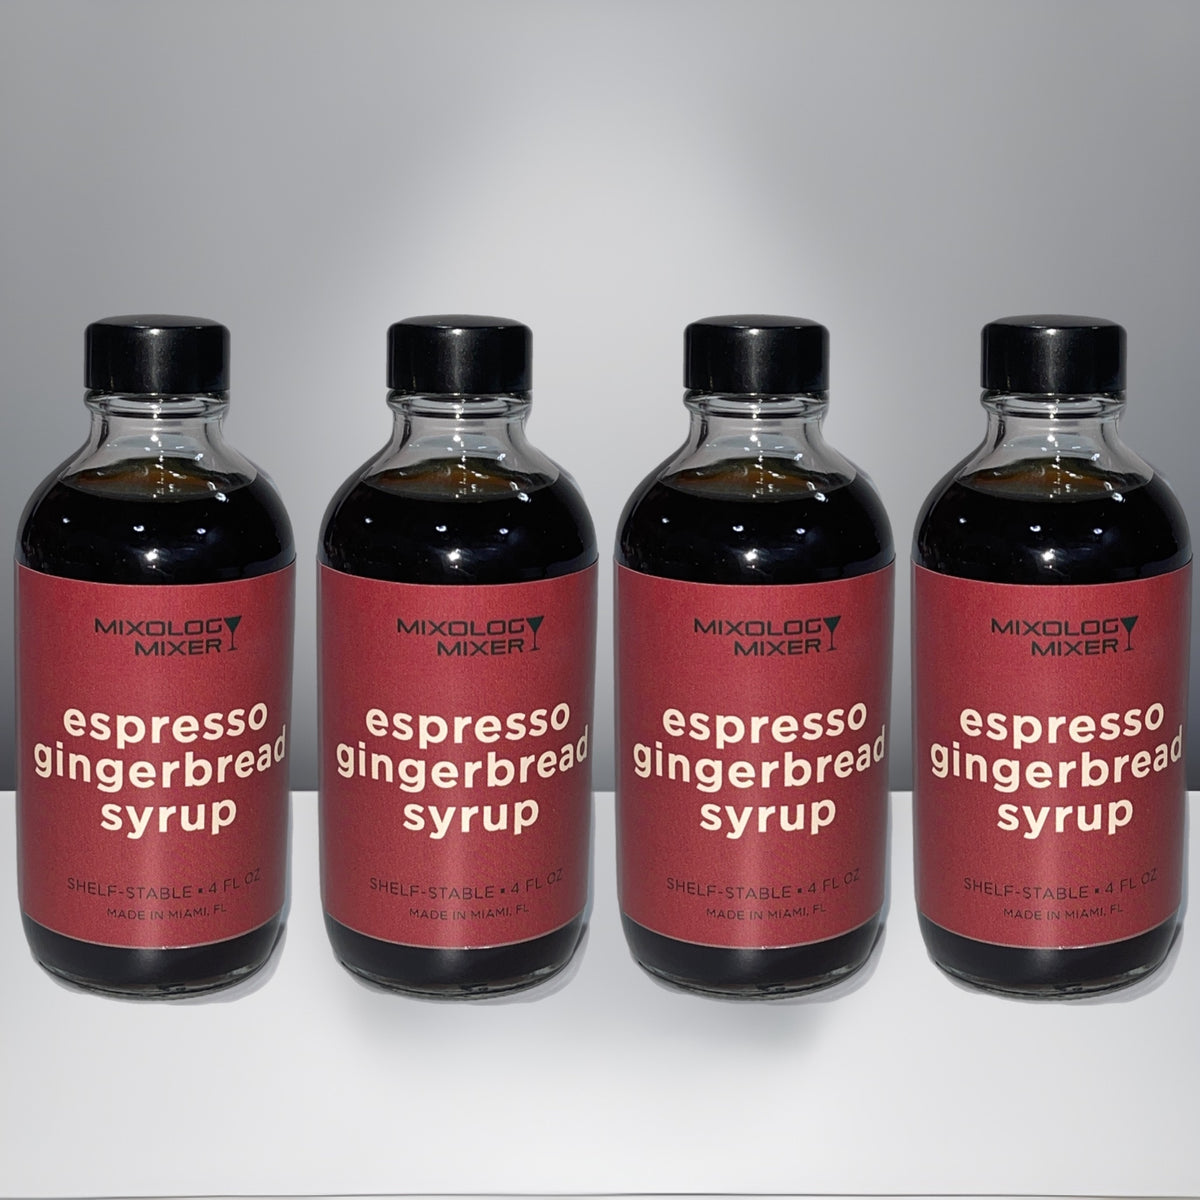 Espresso Gingerbread Syrup